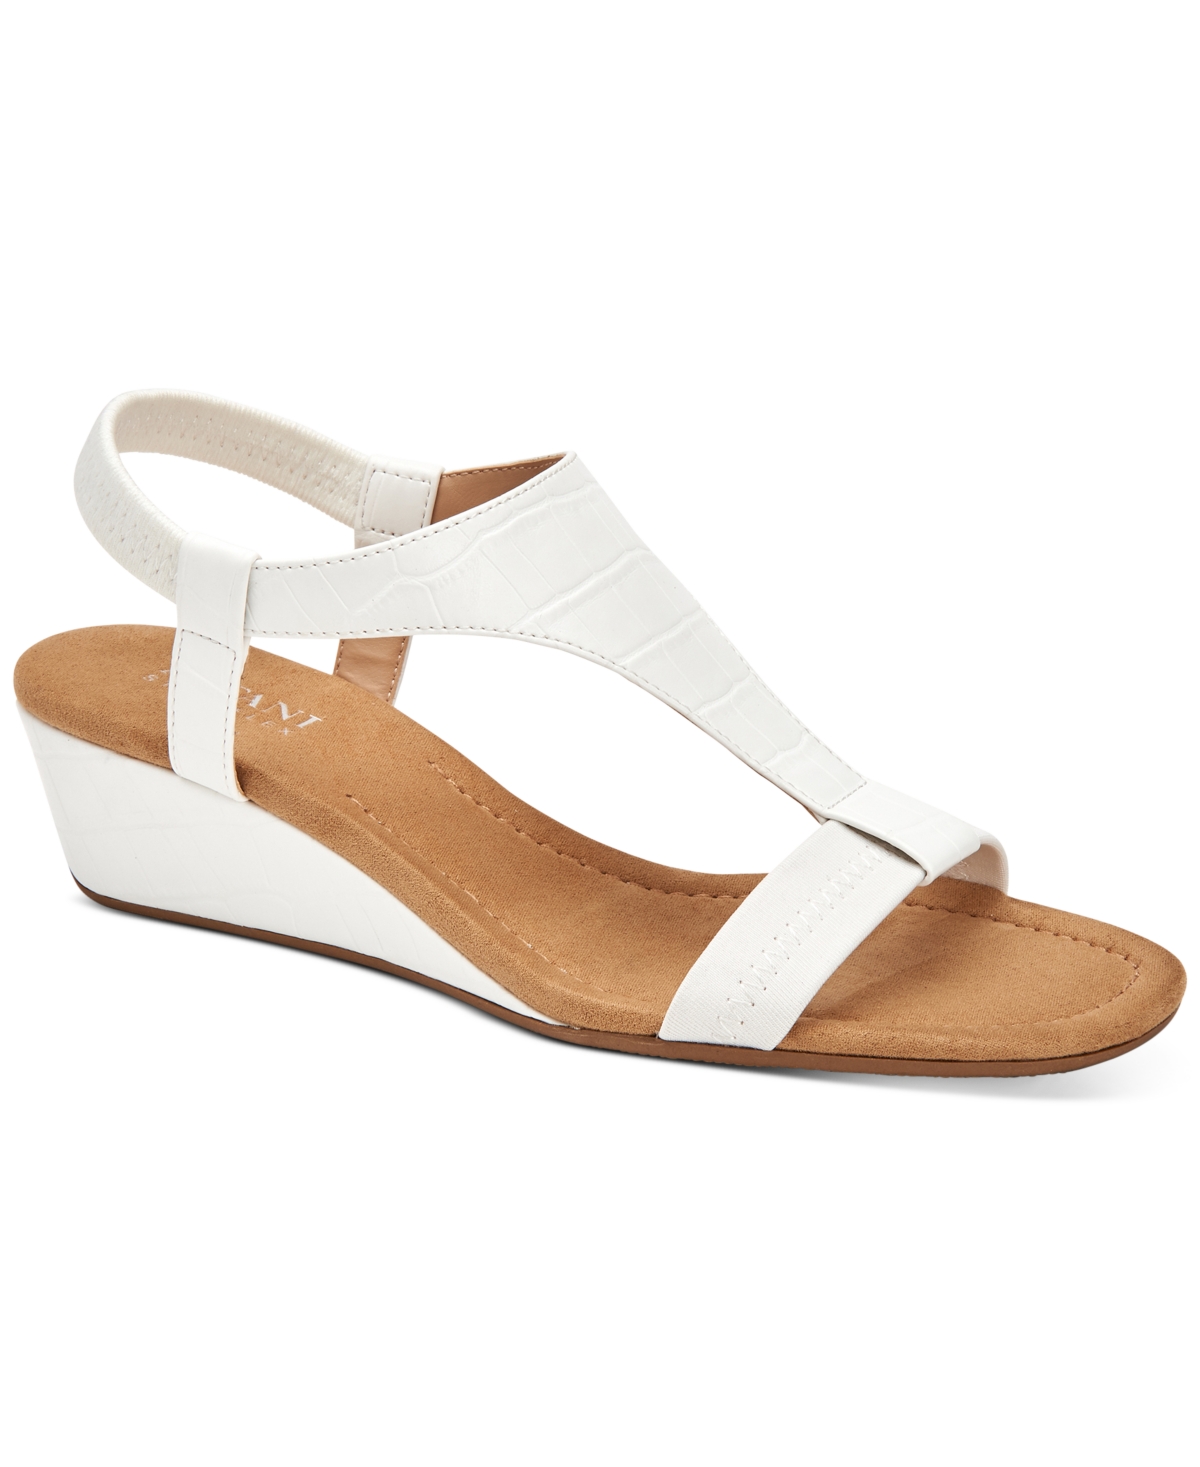 Women's Step 'N Flex Vacanzaa Wedge Sandals, Created for Macy's - White Croc